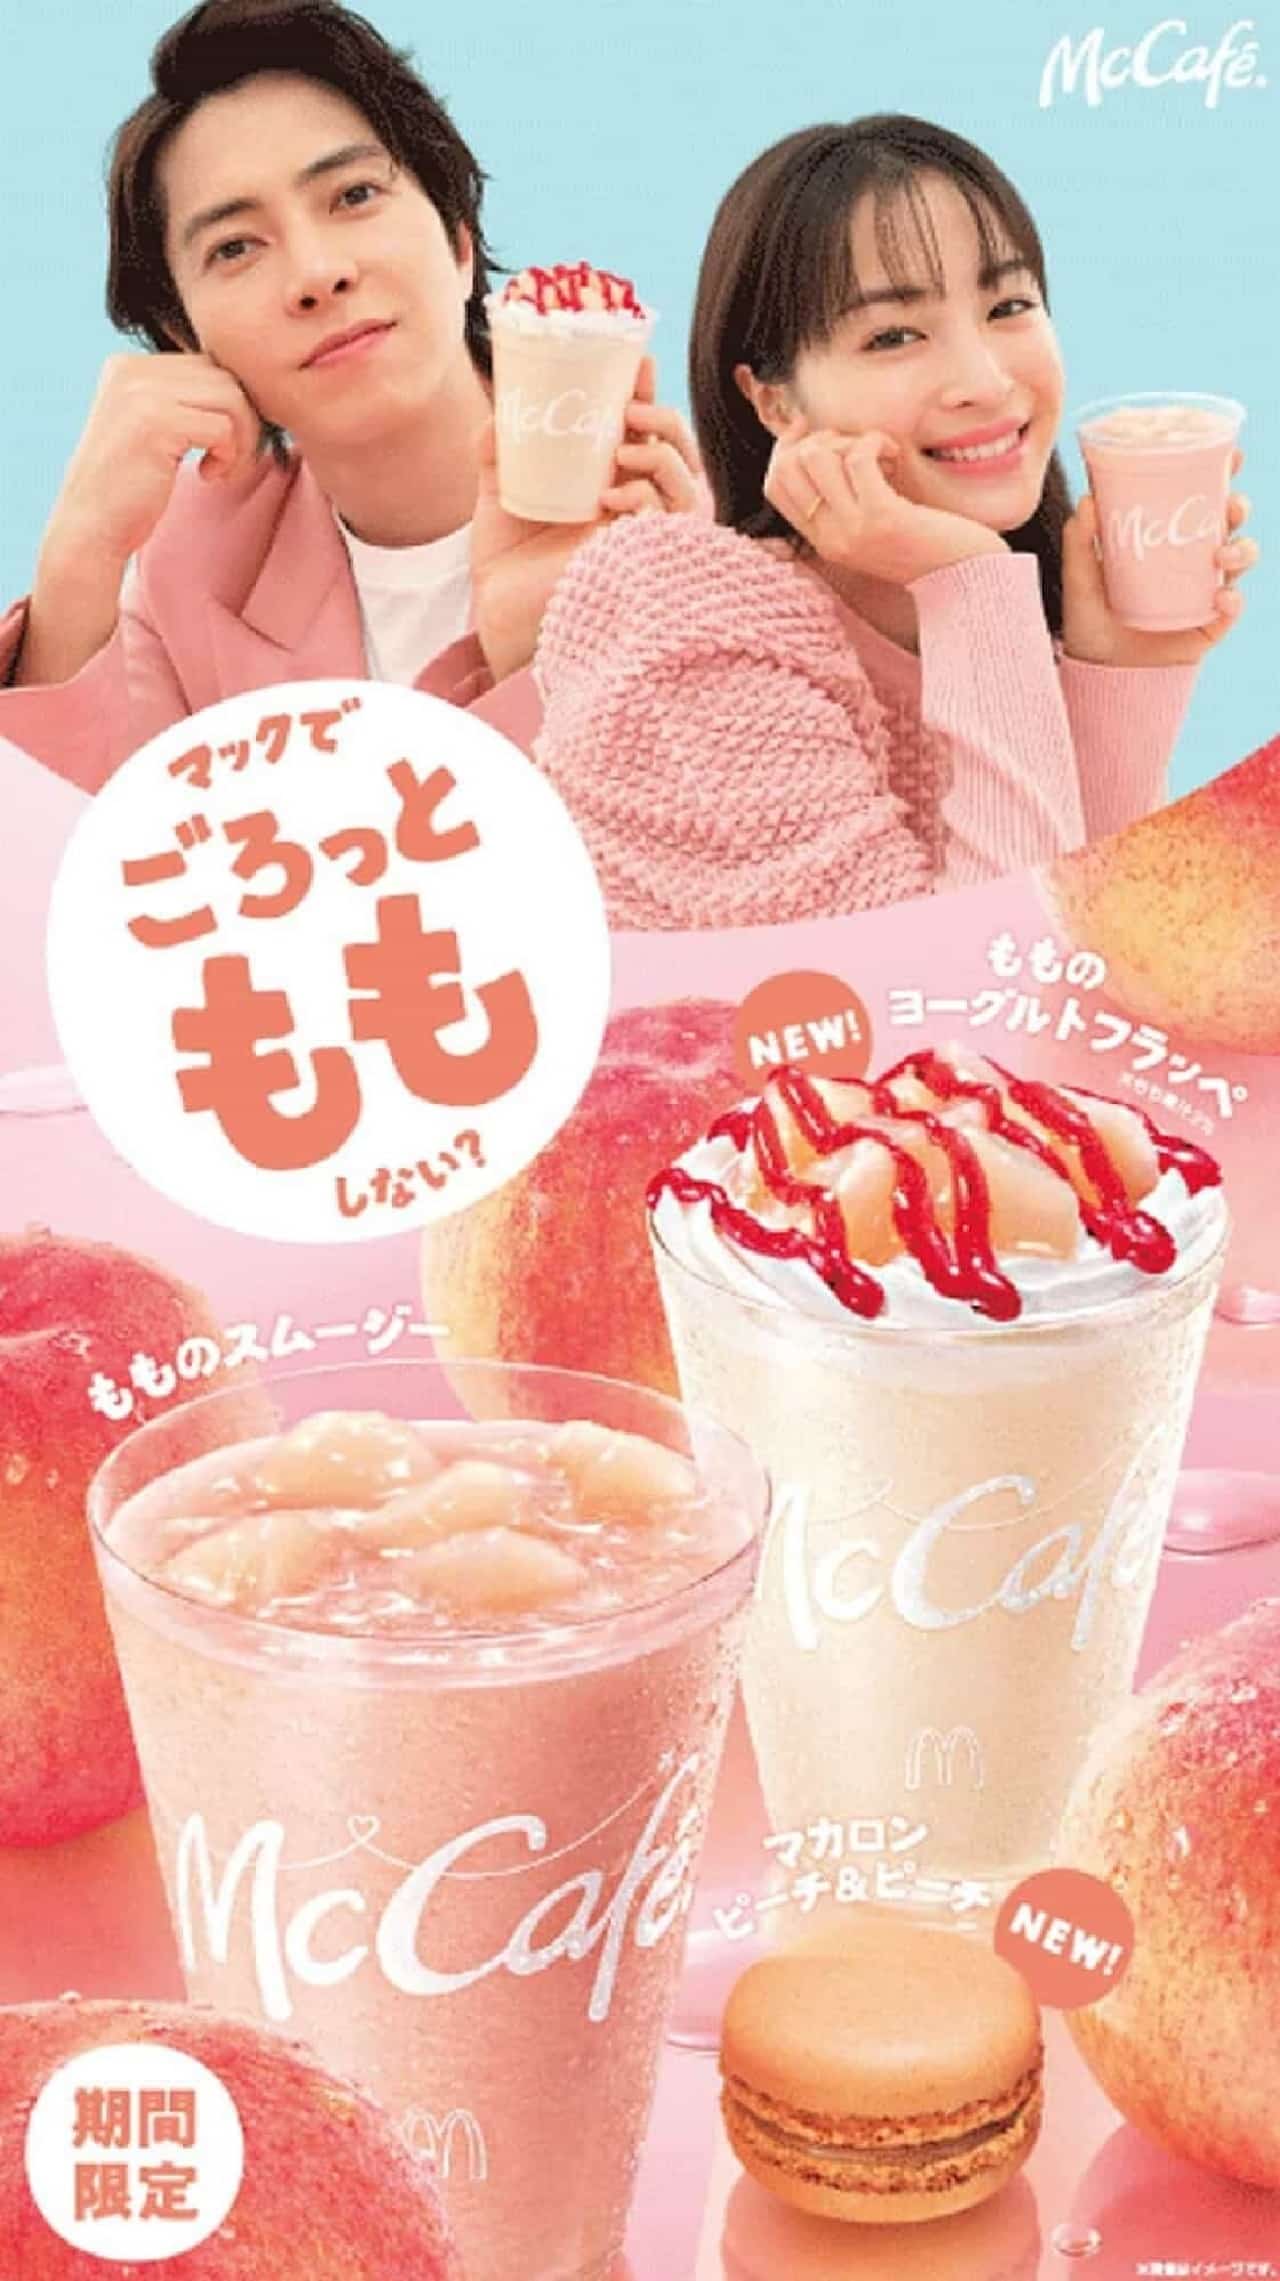 McDonald's "Momo Smoothie", "Momo Yogurt Frappe", "Macaroon Peach & Peach".